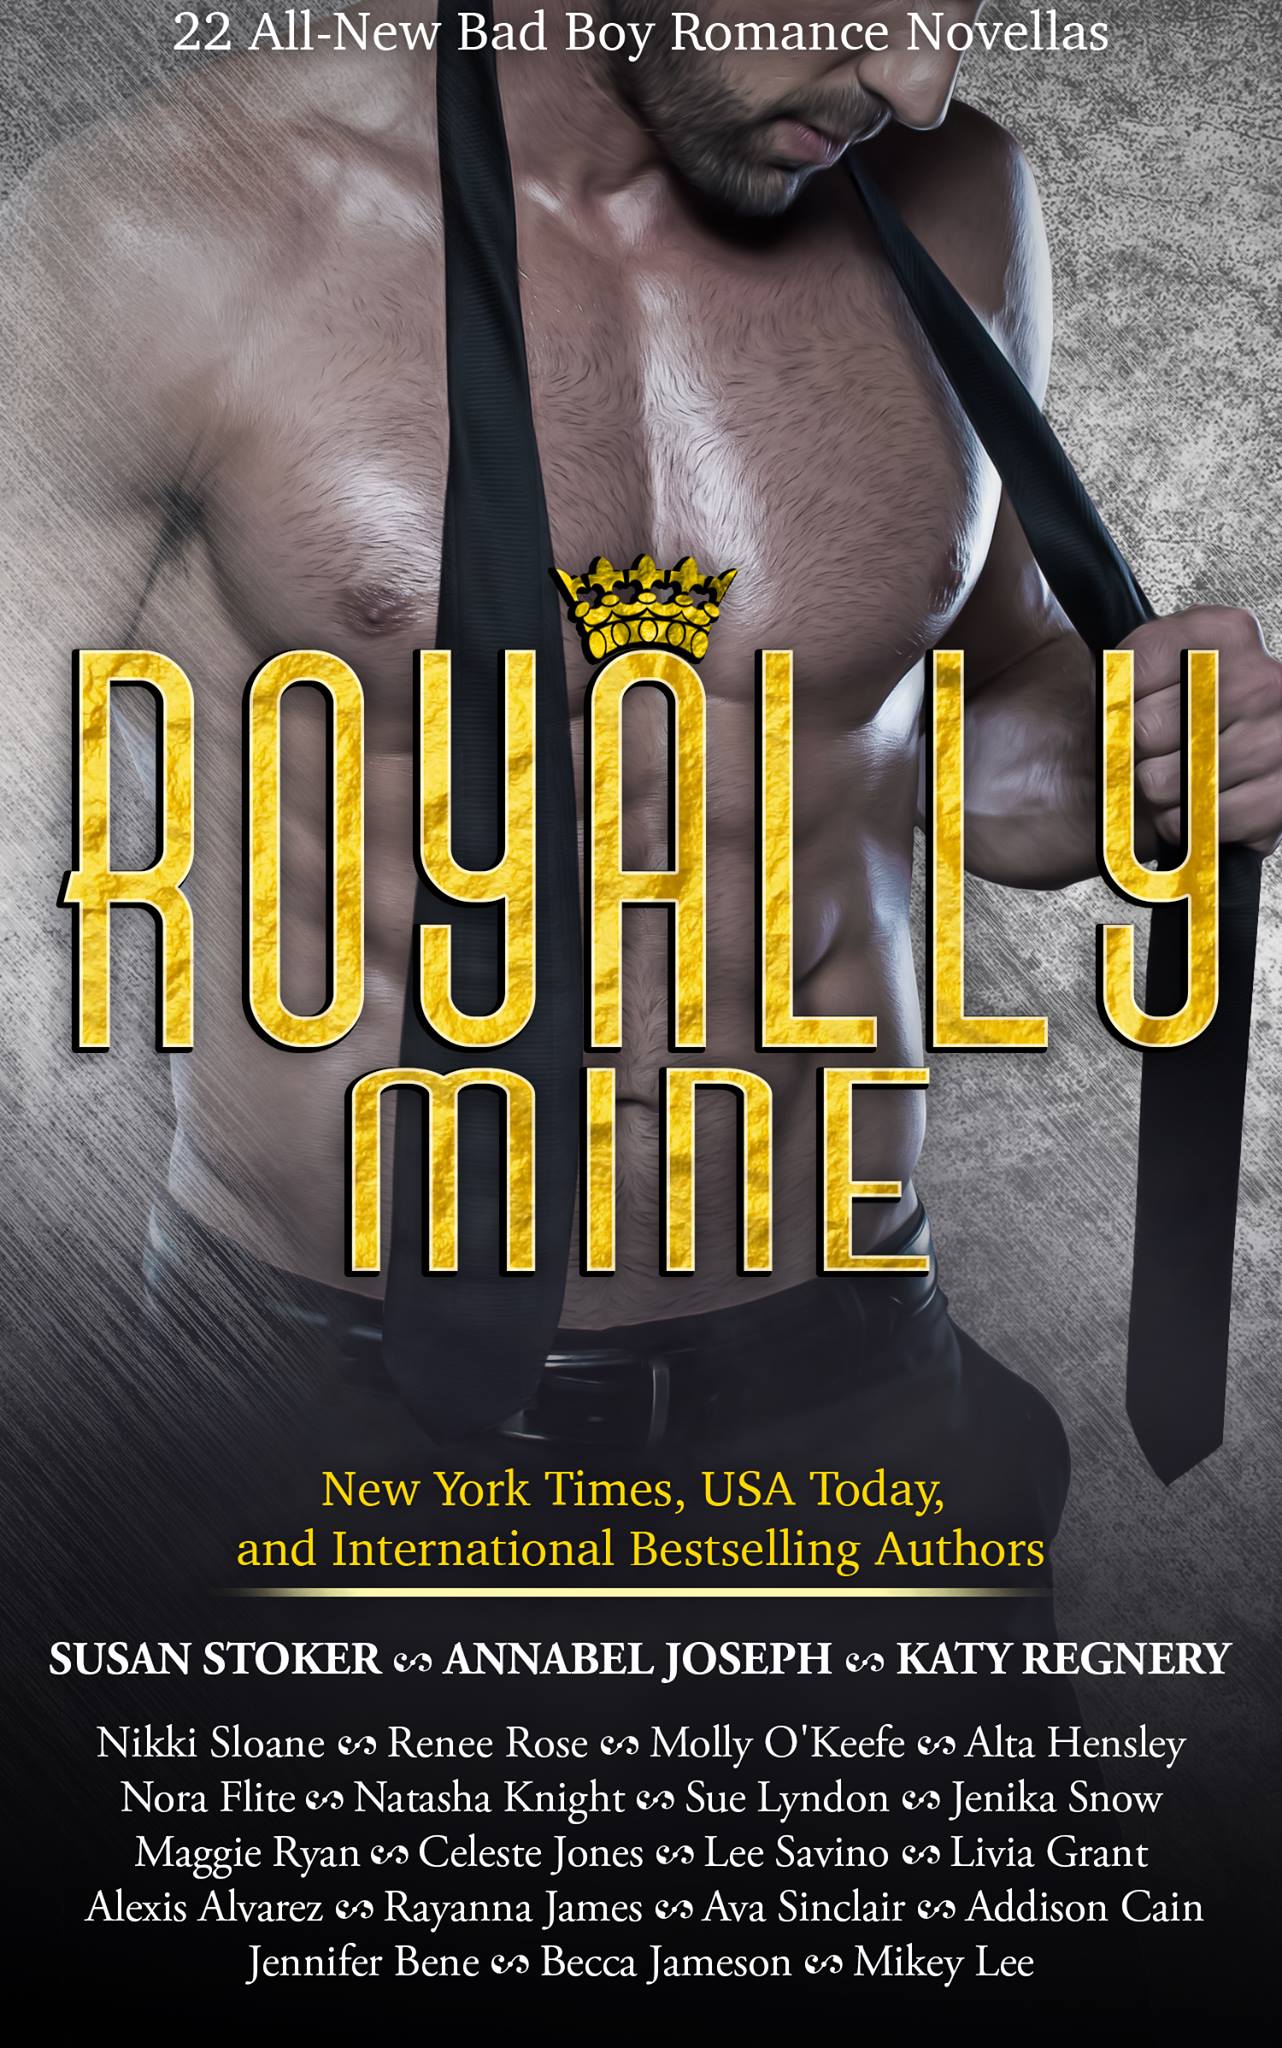 Royally Mine: 22 All-New Bad Boy Romance Novellas by Renee Rose